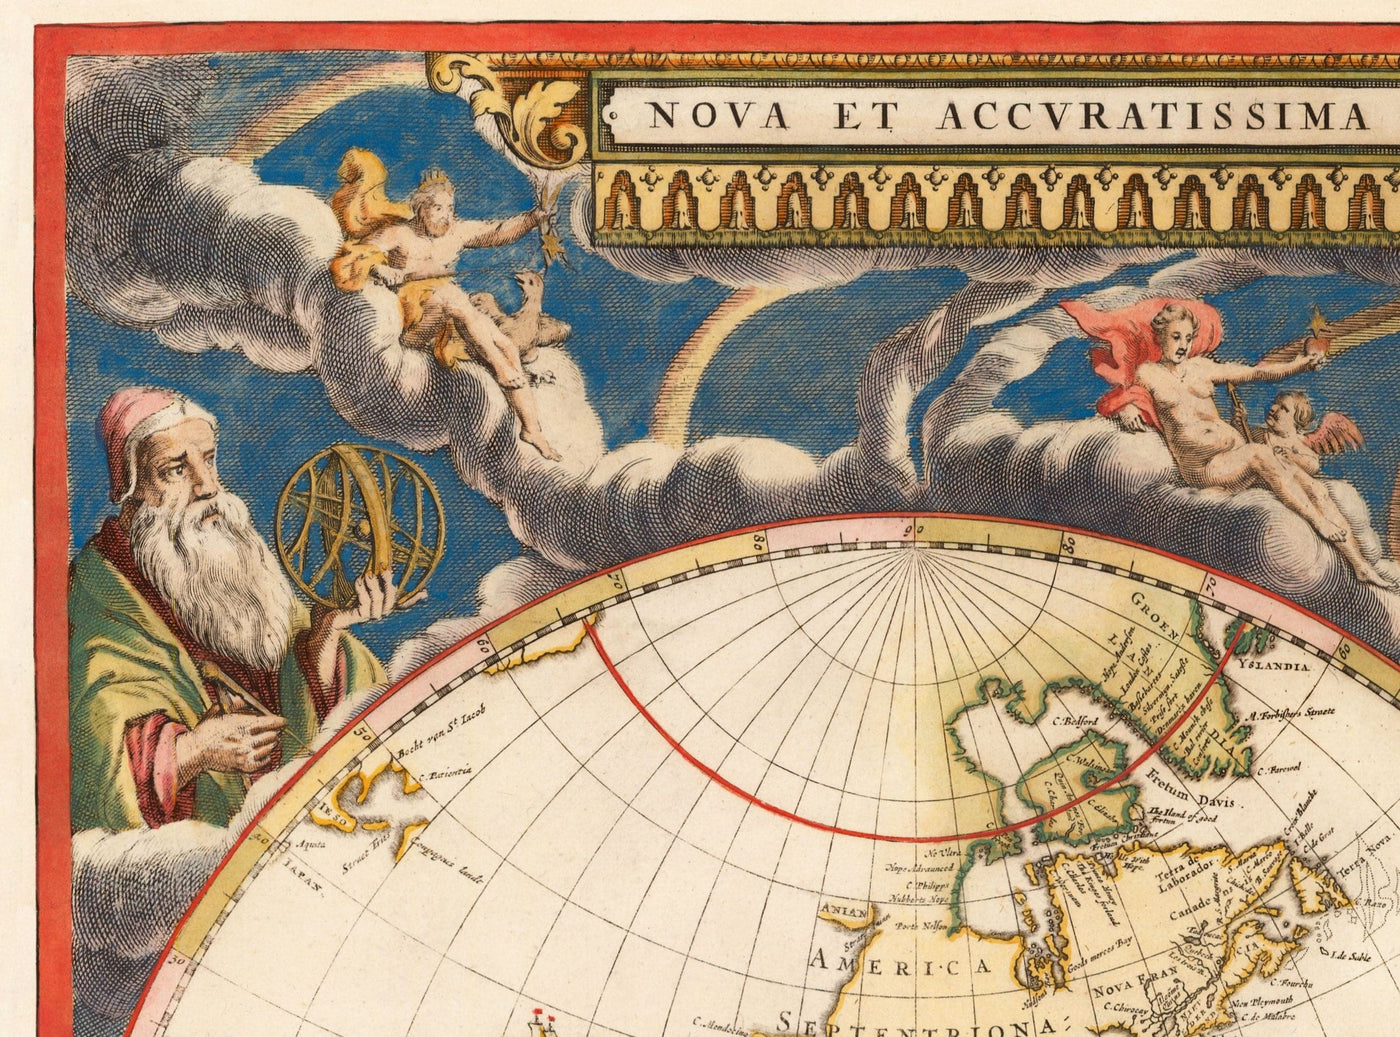 Old World Atlas Map, 1662 by Joan Blaeu - Rare Handcoloured Vintage Wall Art